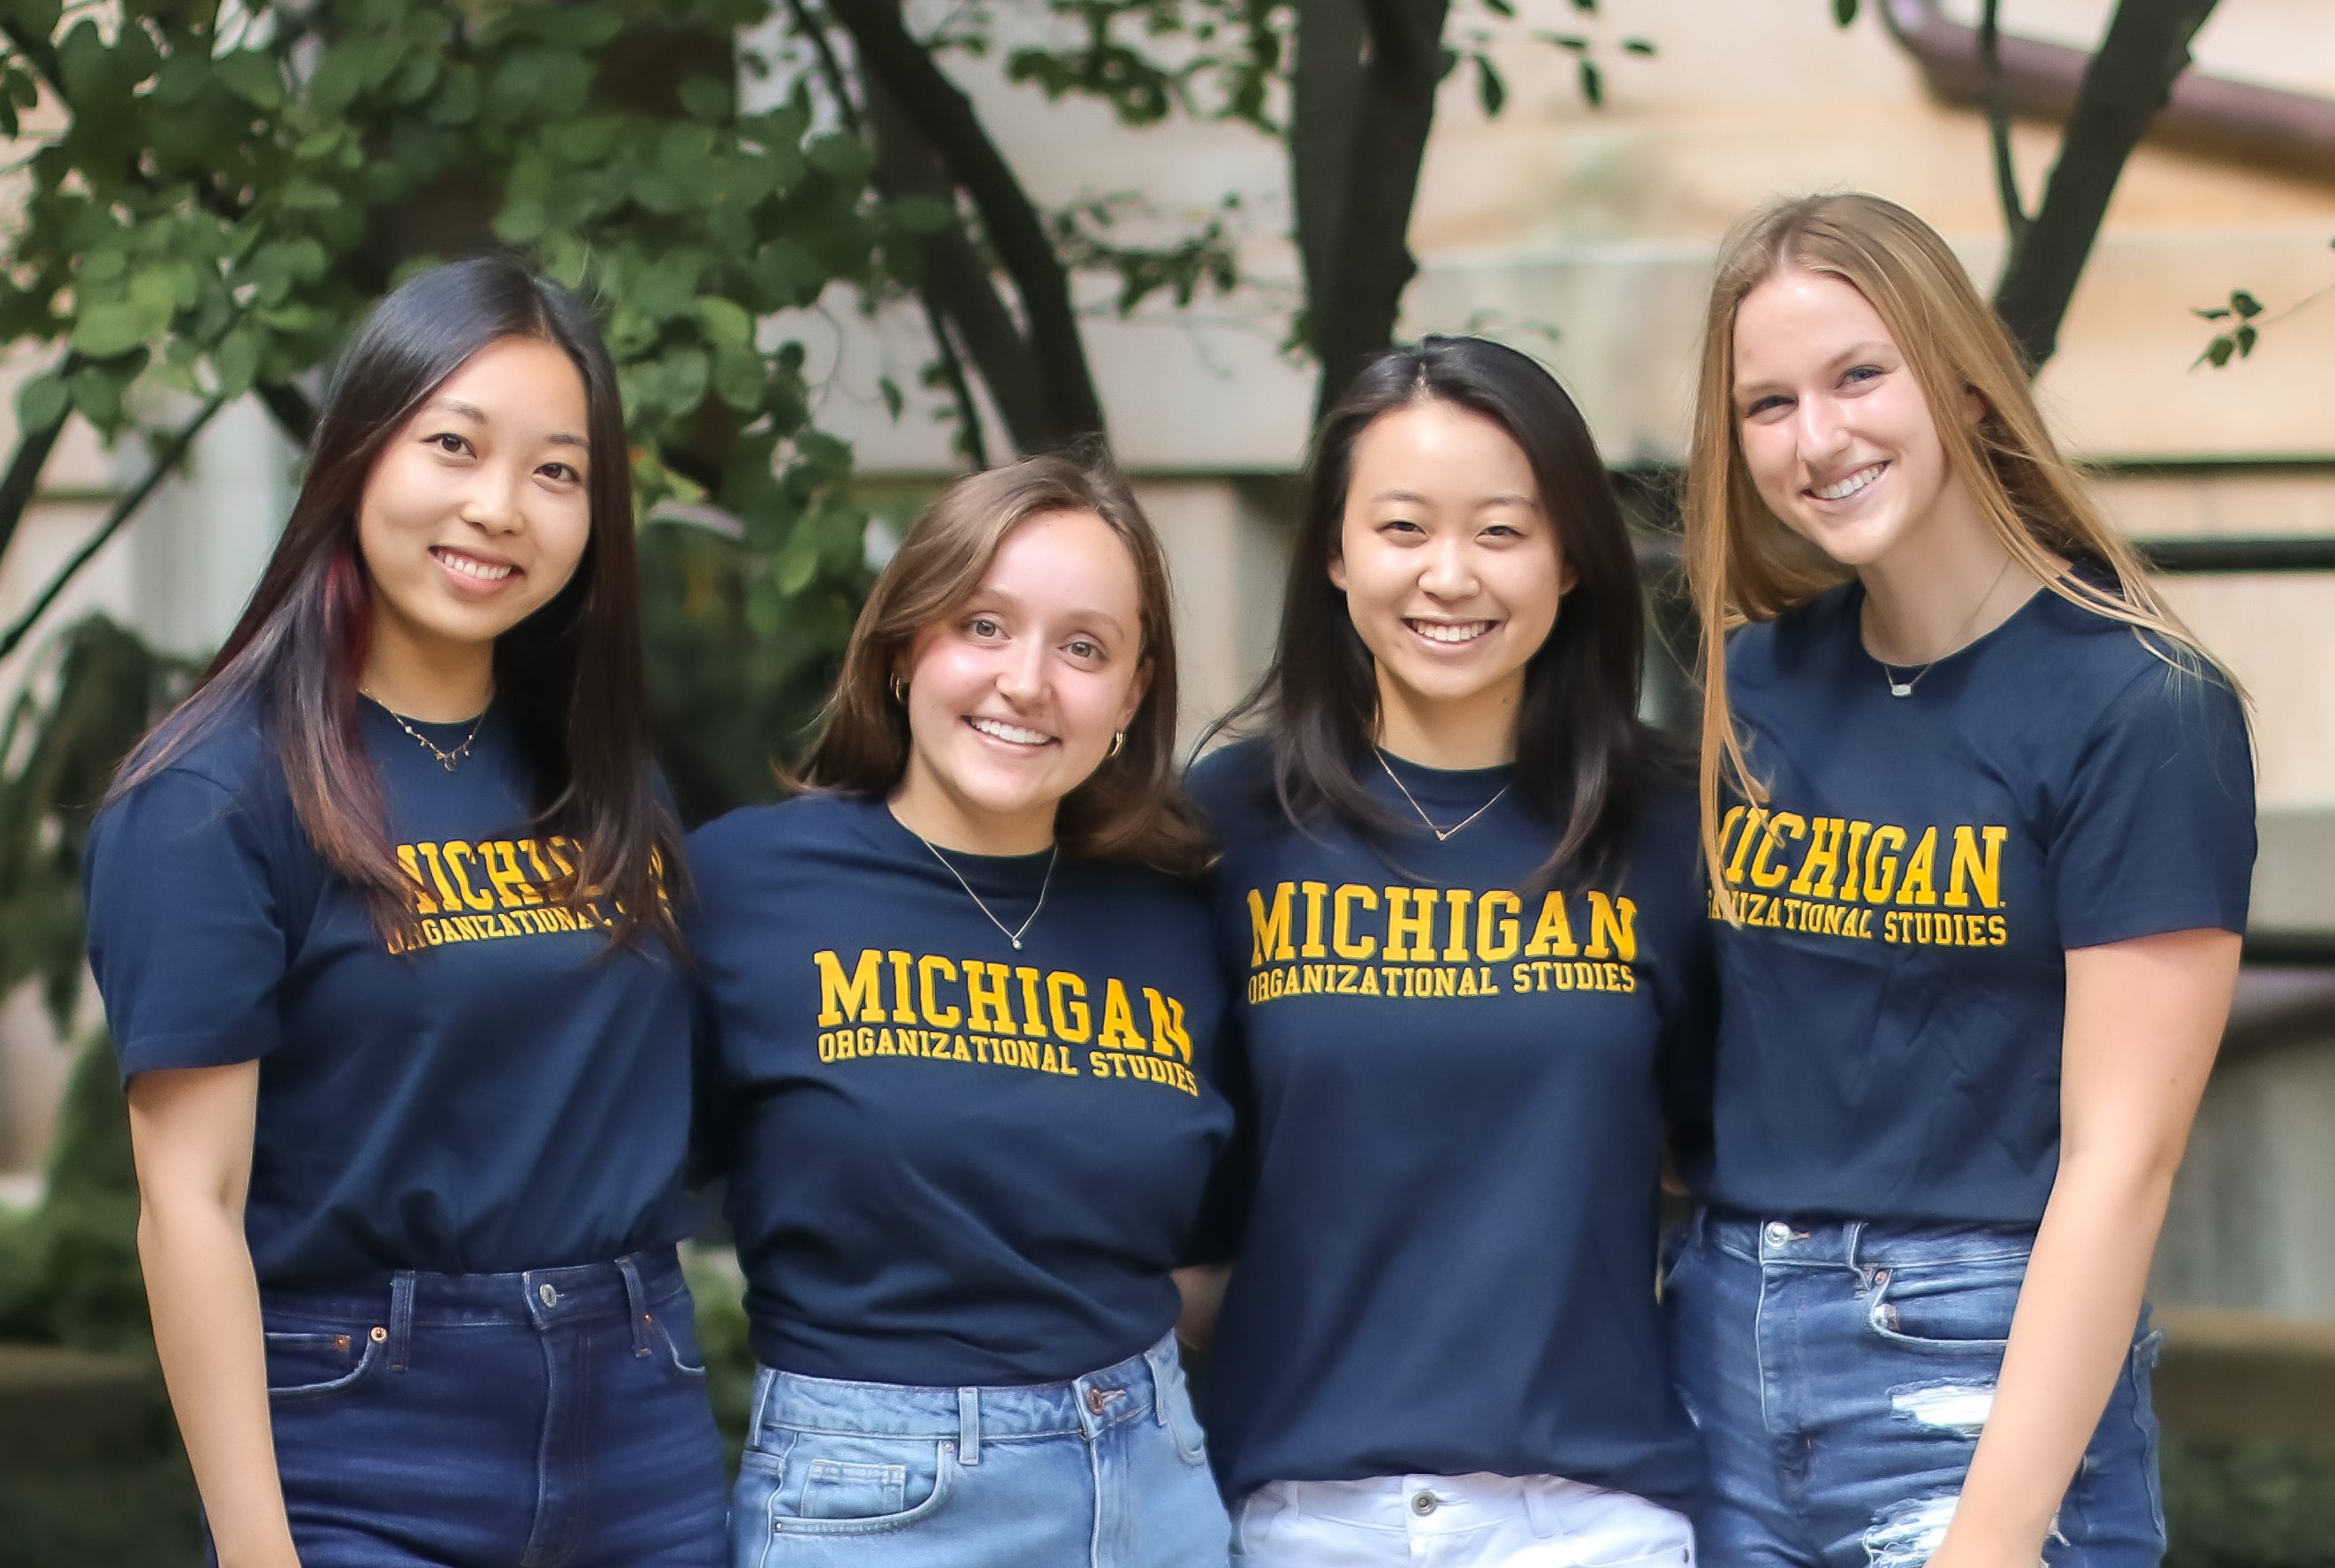 4 women smiling at camera in t-shirts that read "Michigan Organizational Studies"